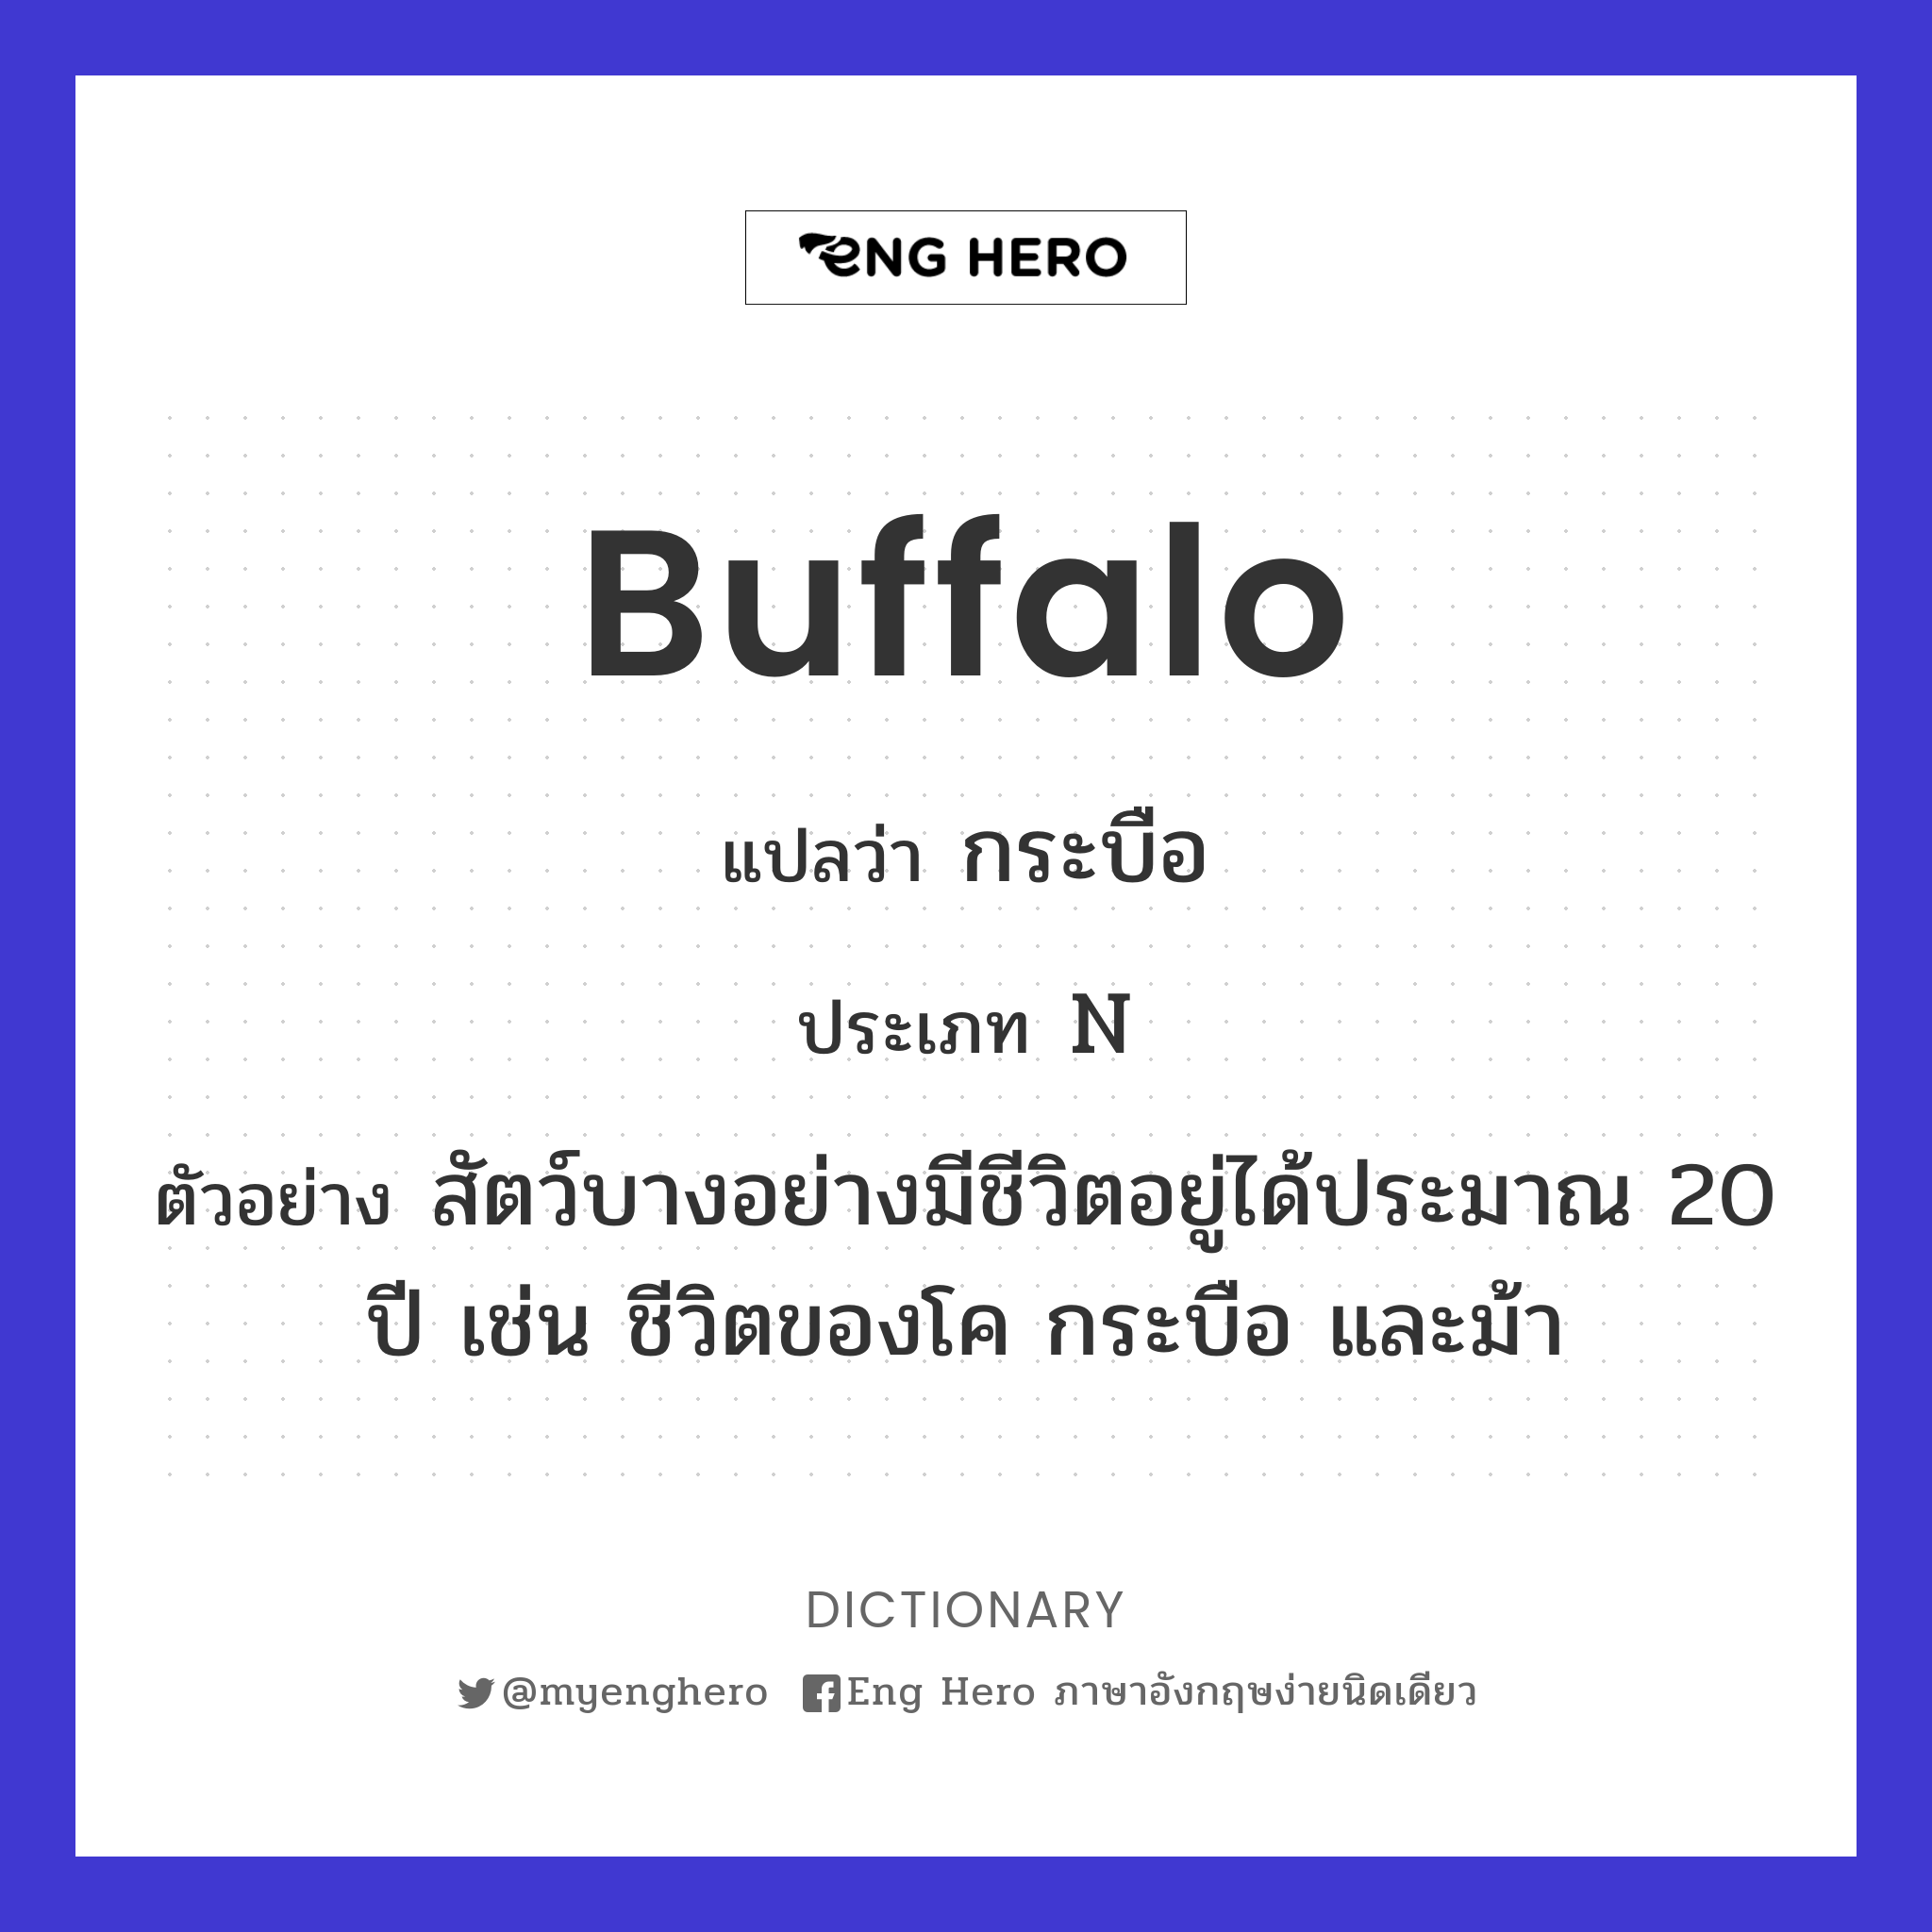 buffalo